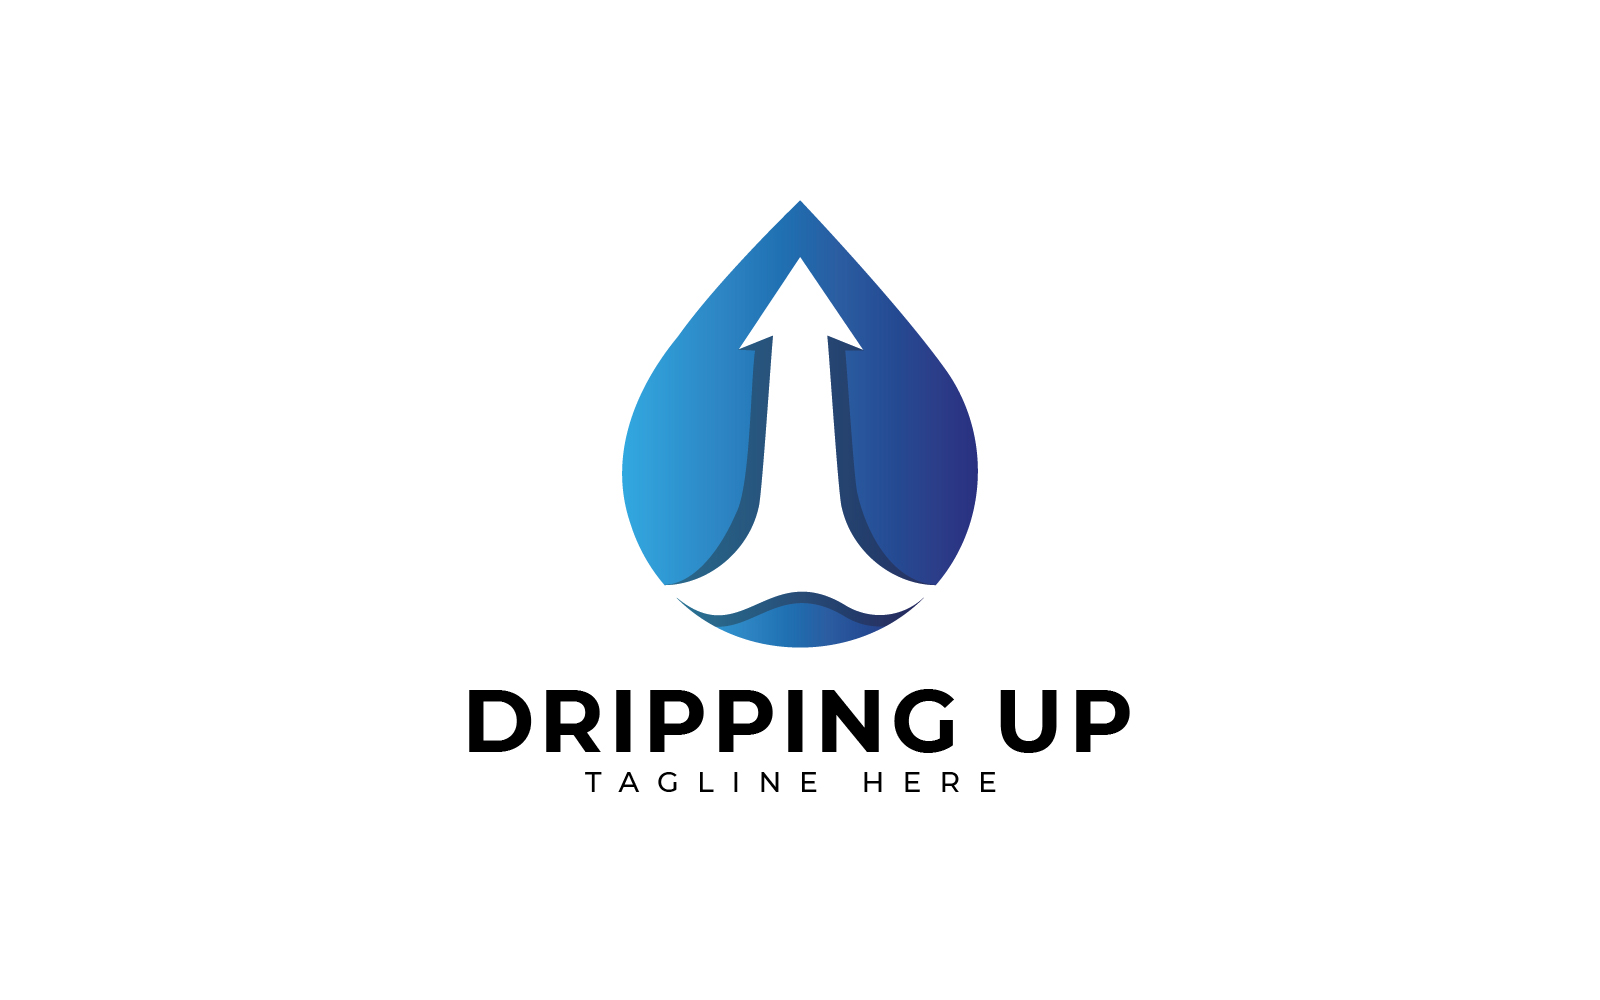 Dripping up logo design template